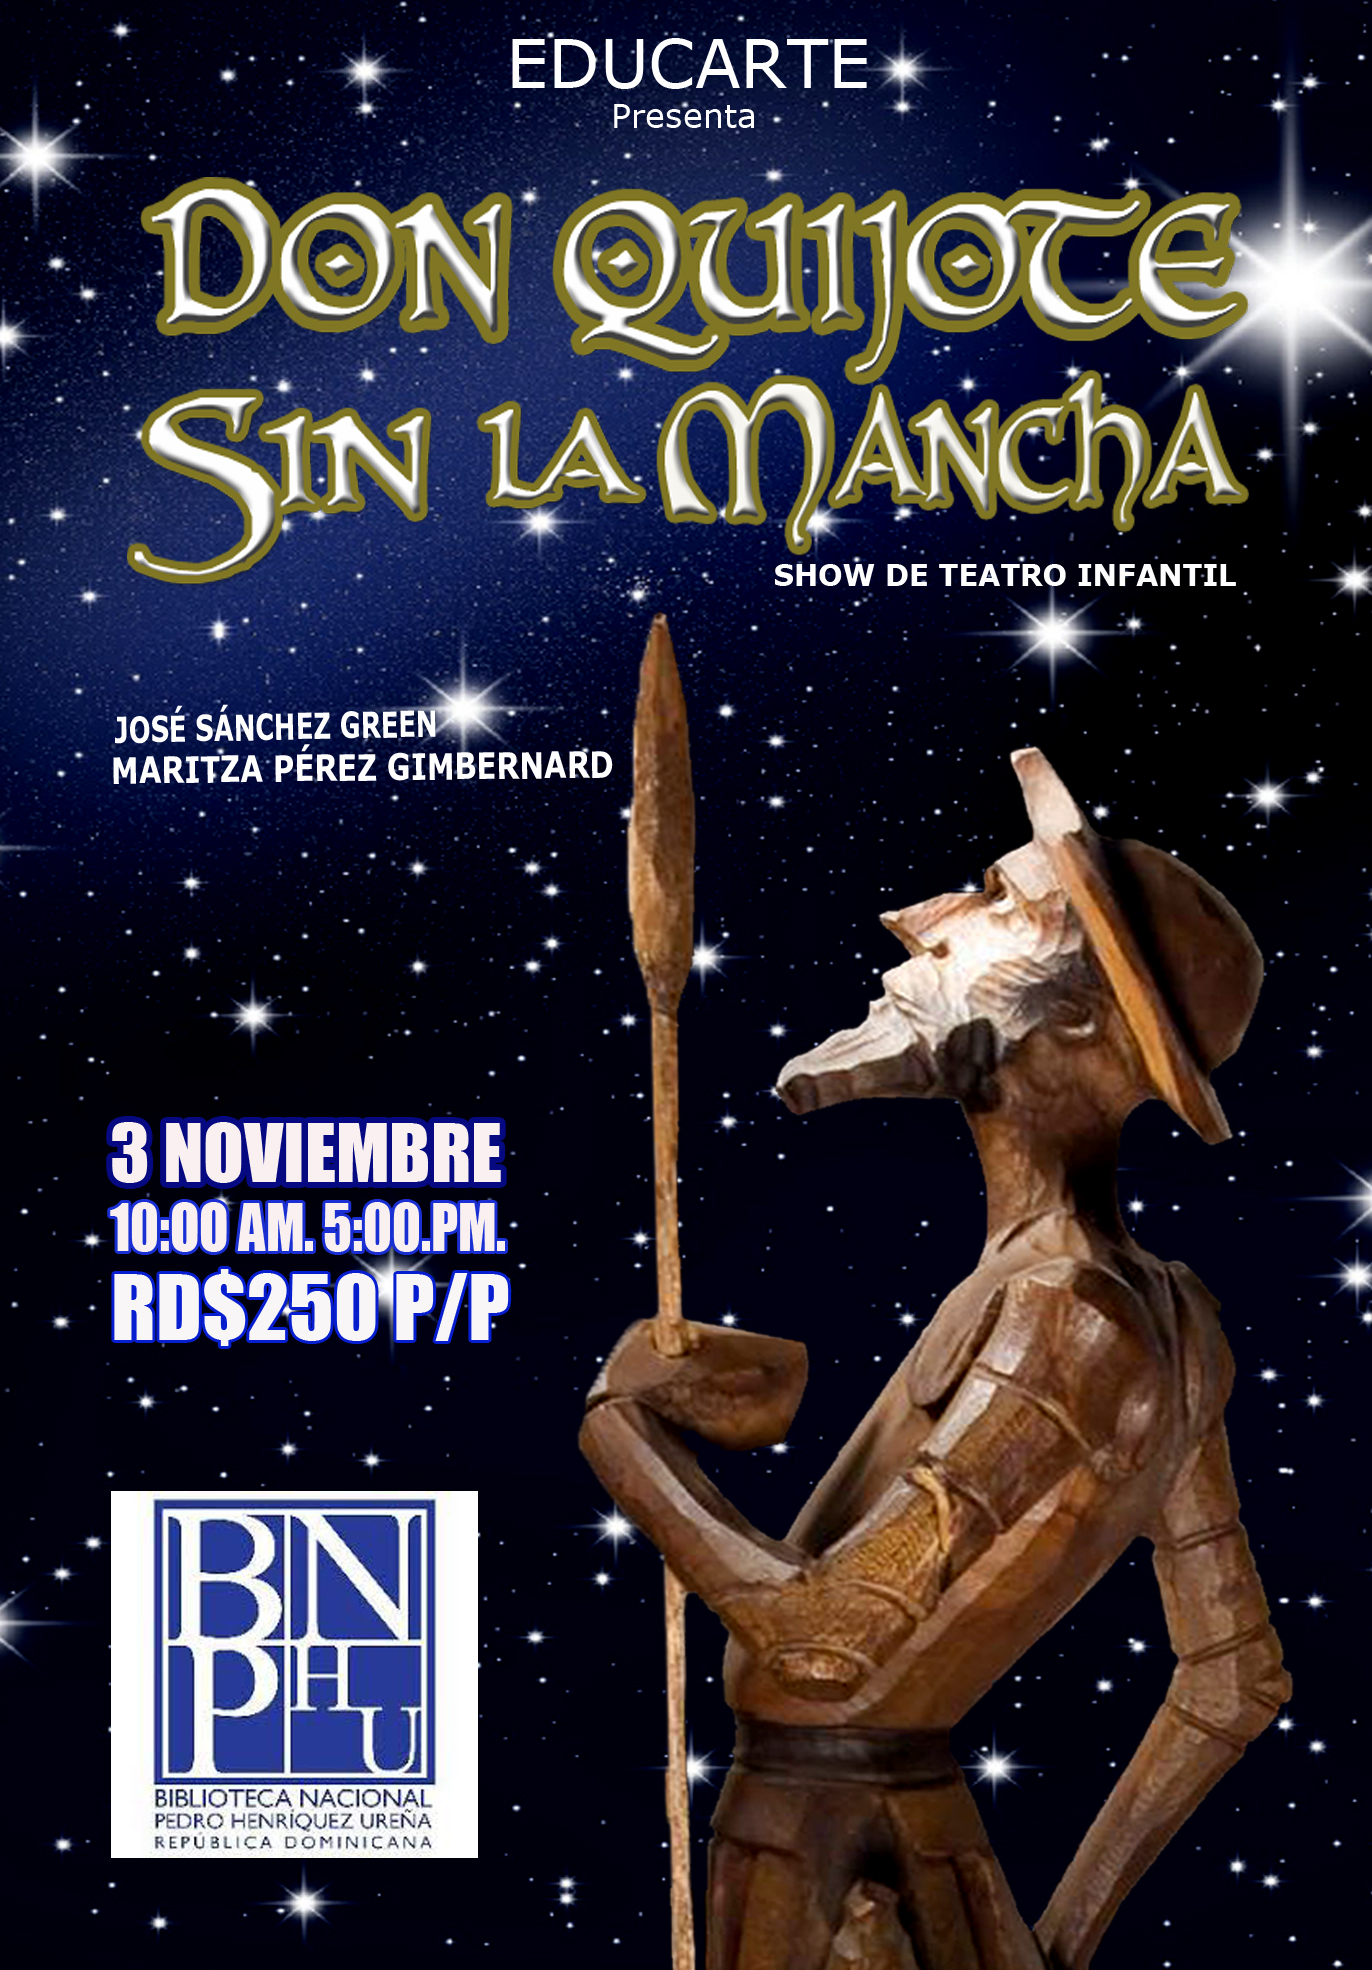 Don Quijote sin la mancha AplatanaoNews